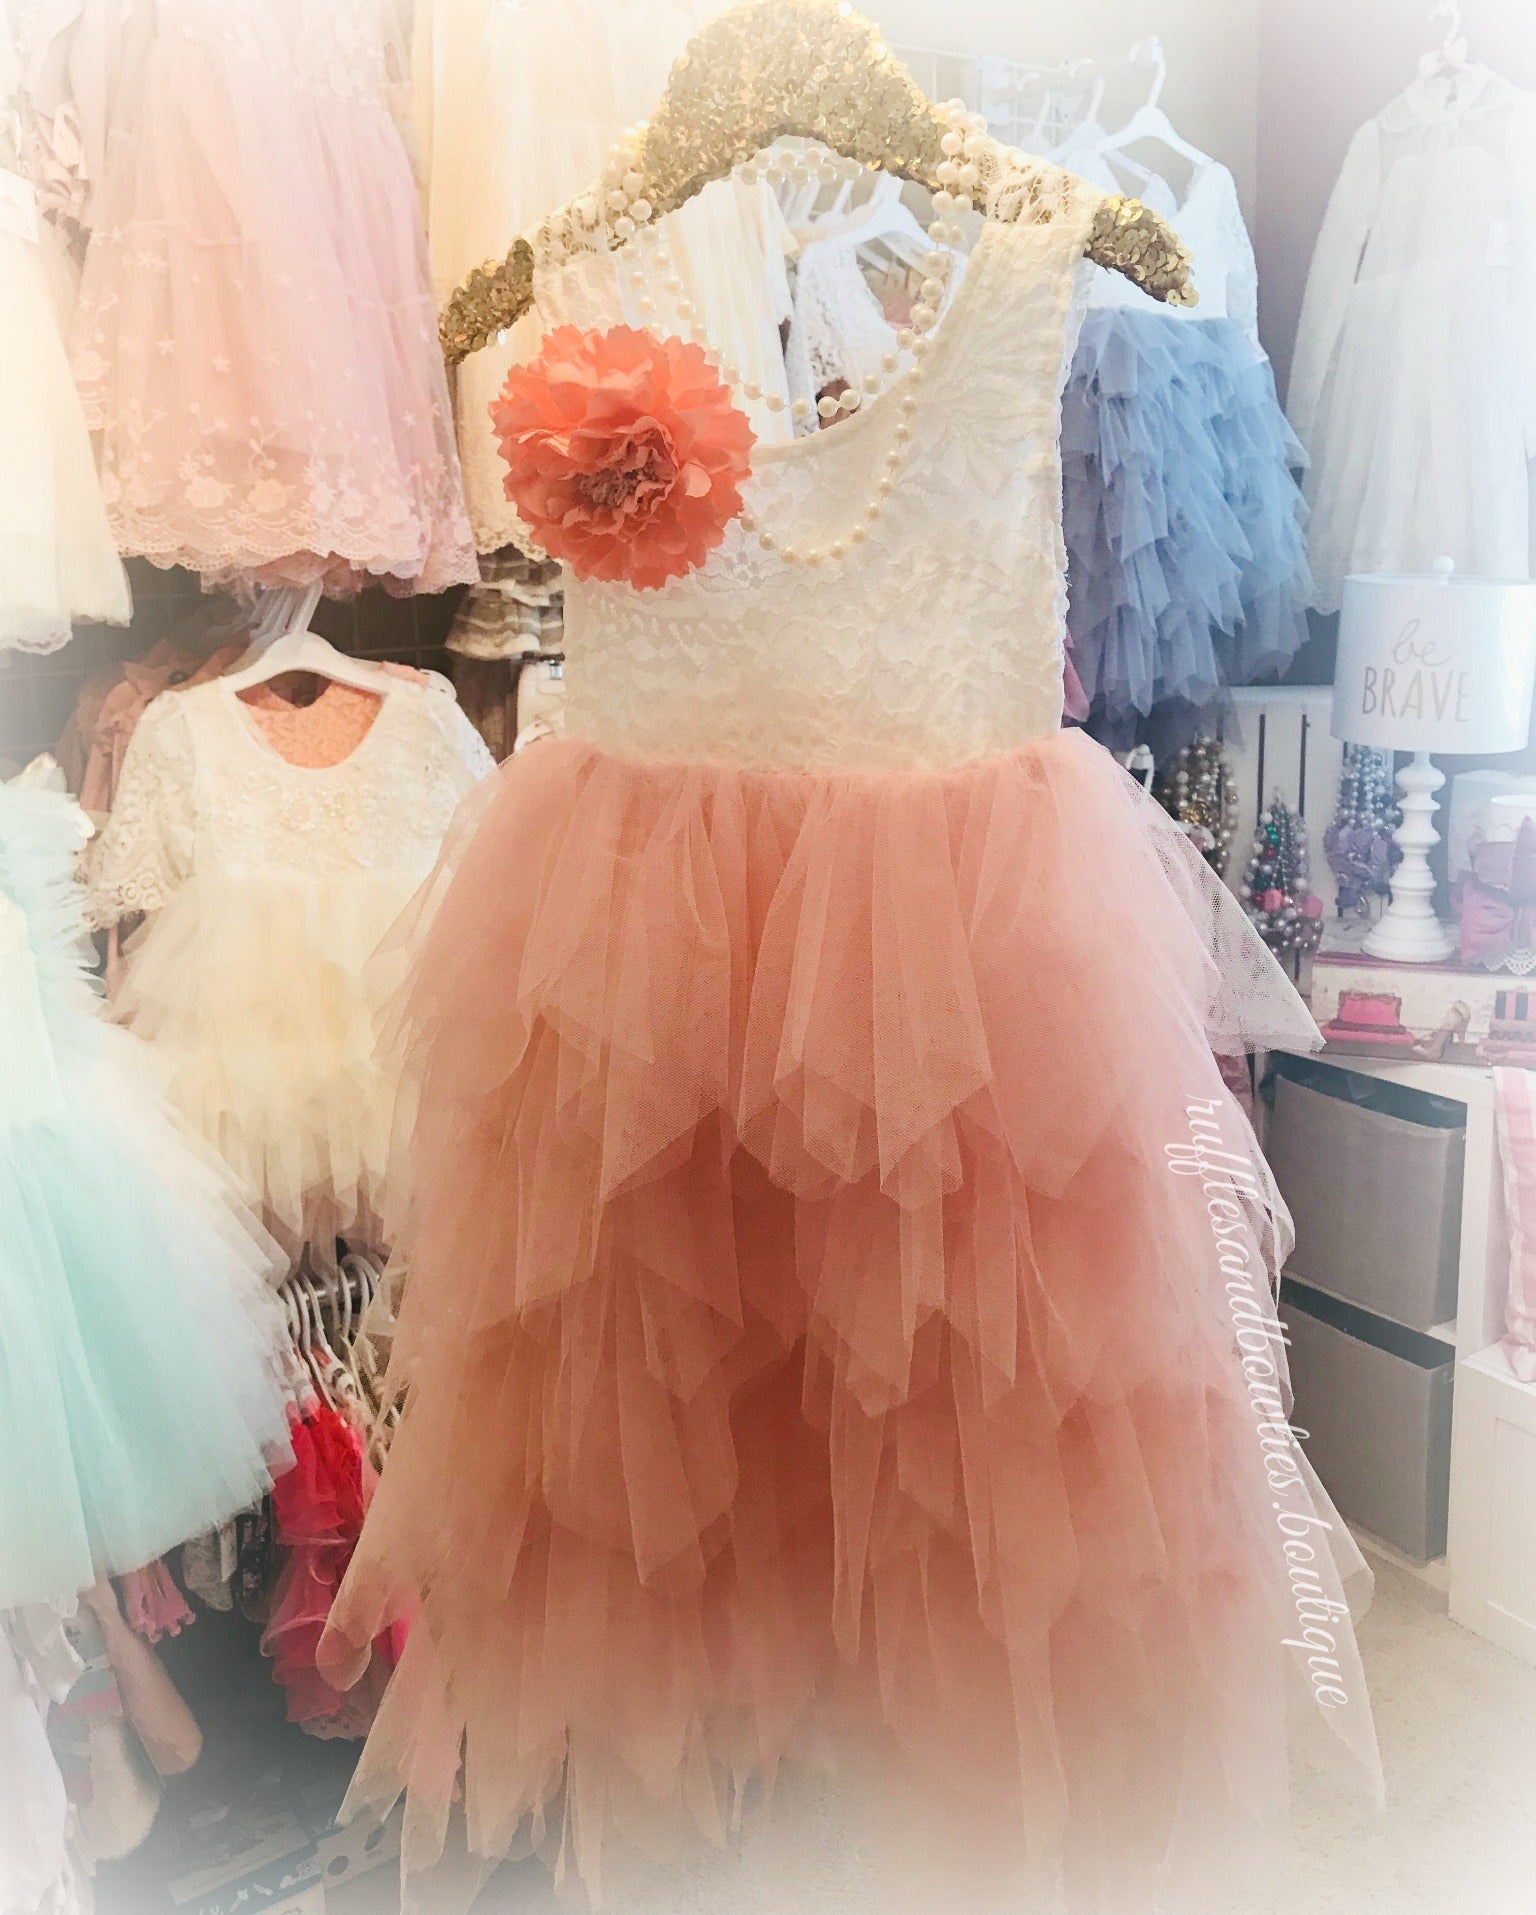 Veronica Soft White Eyelash Lace with a Blush Long Tutu Skirt - Princess Dress